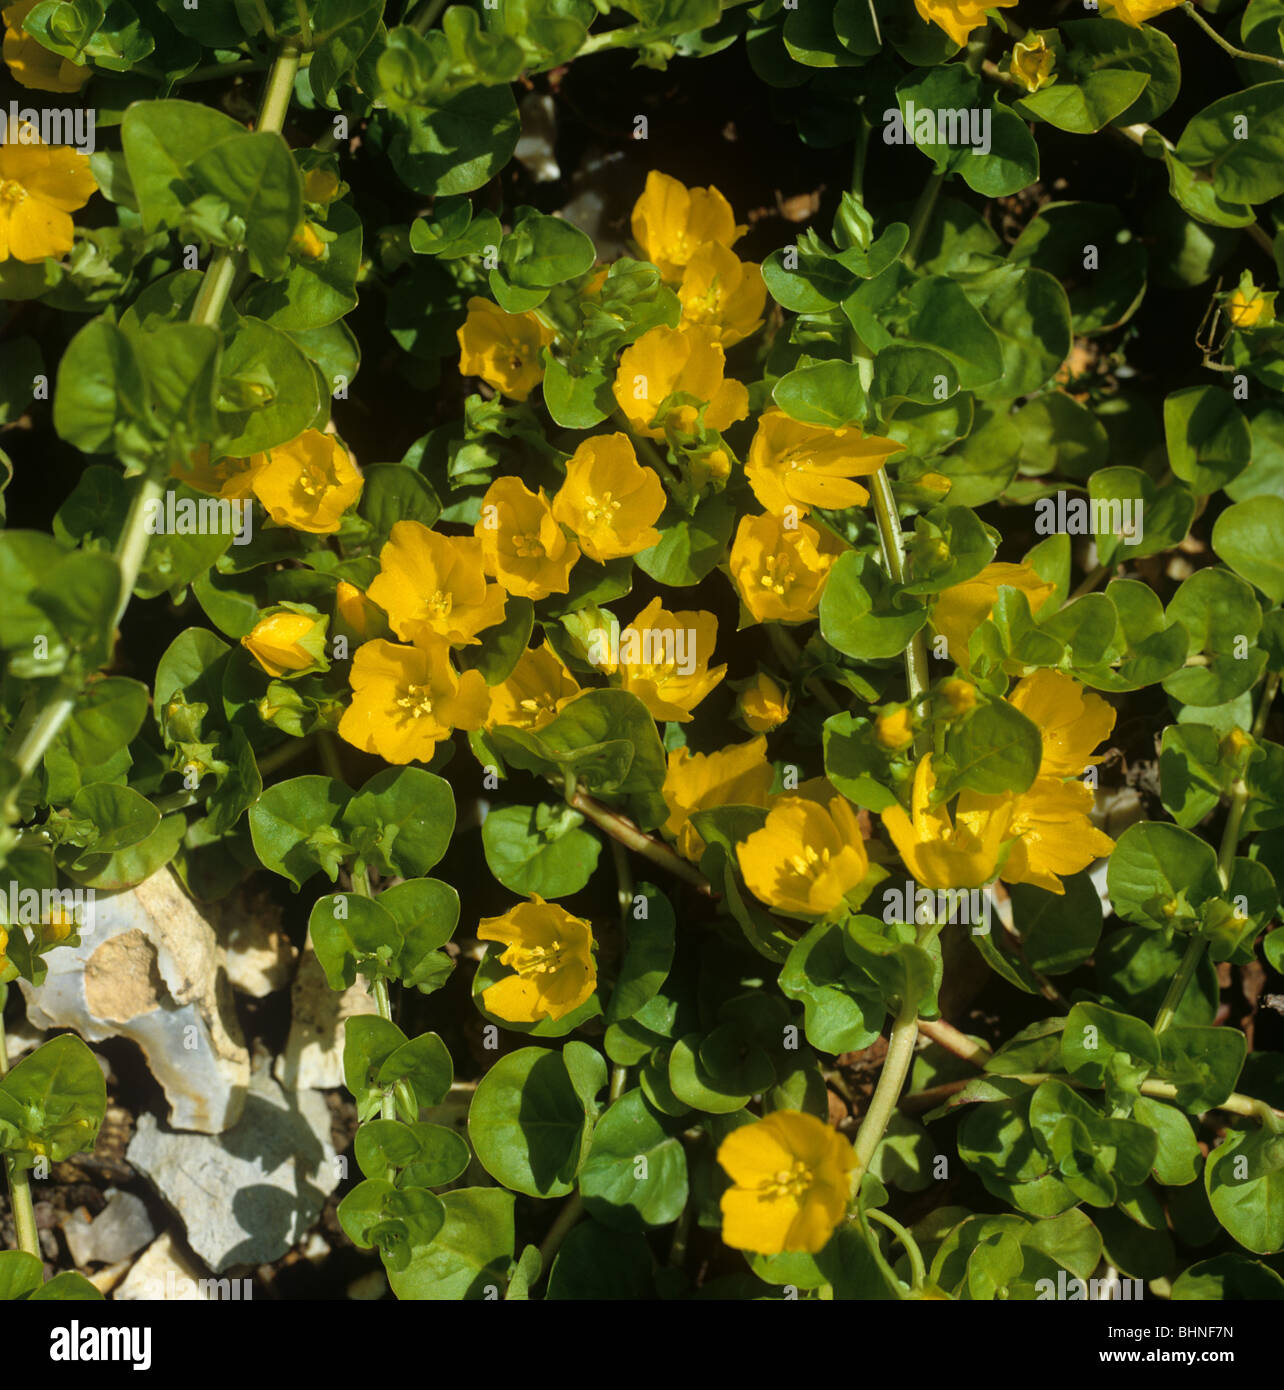 Creeping Jenny or moneywort (Lysimachia nummularia) a prostrate flowering plant Stock Photo